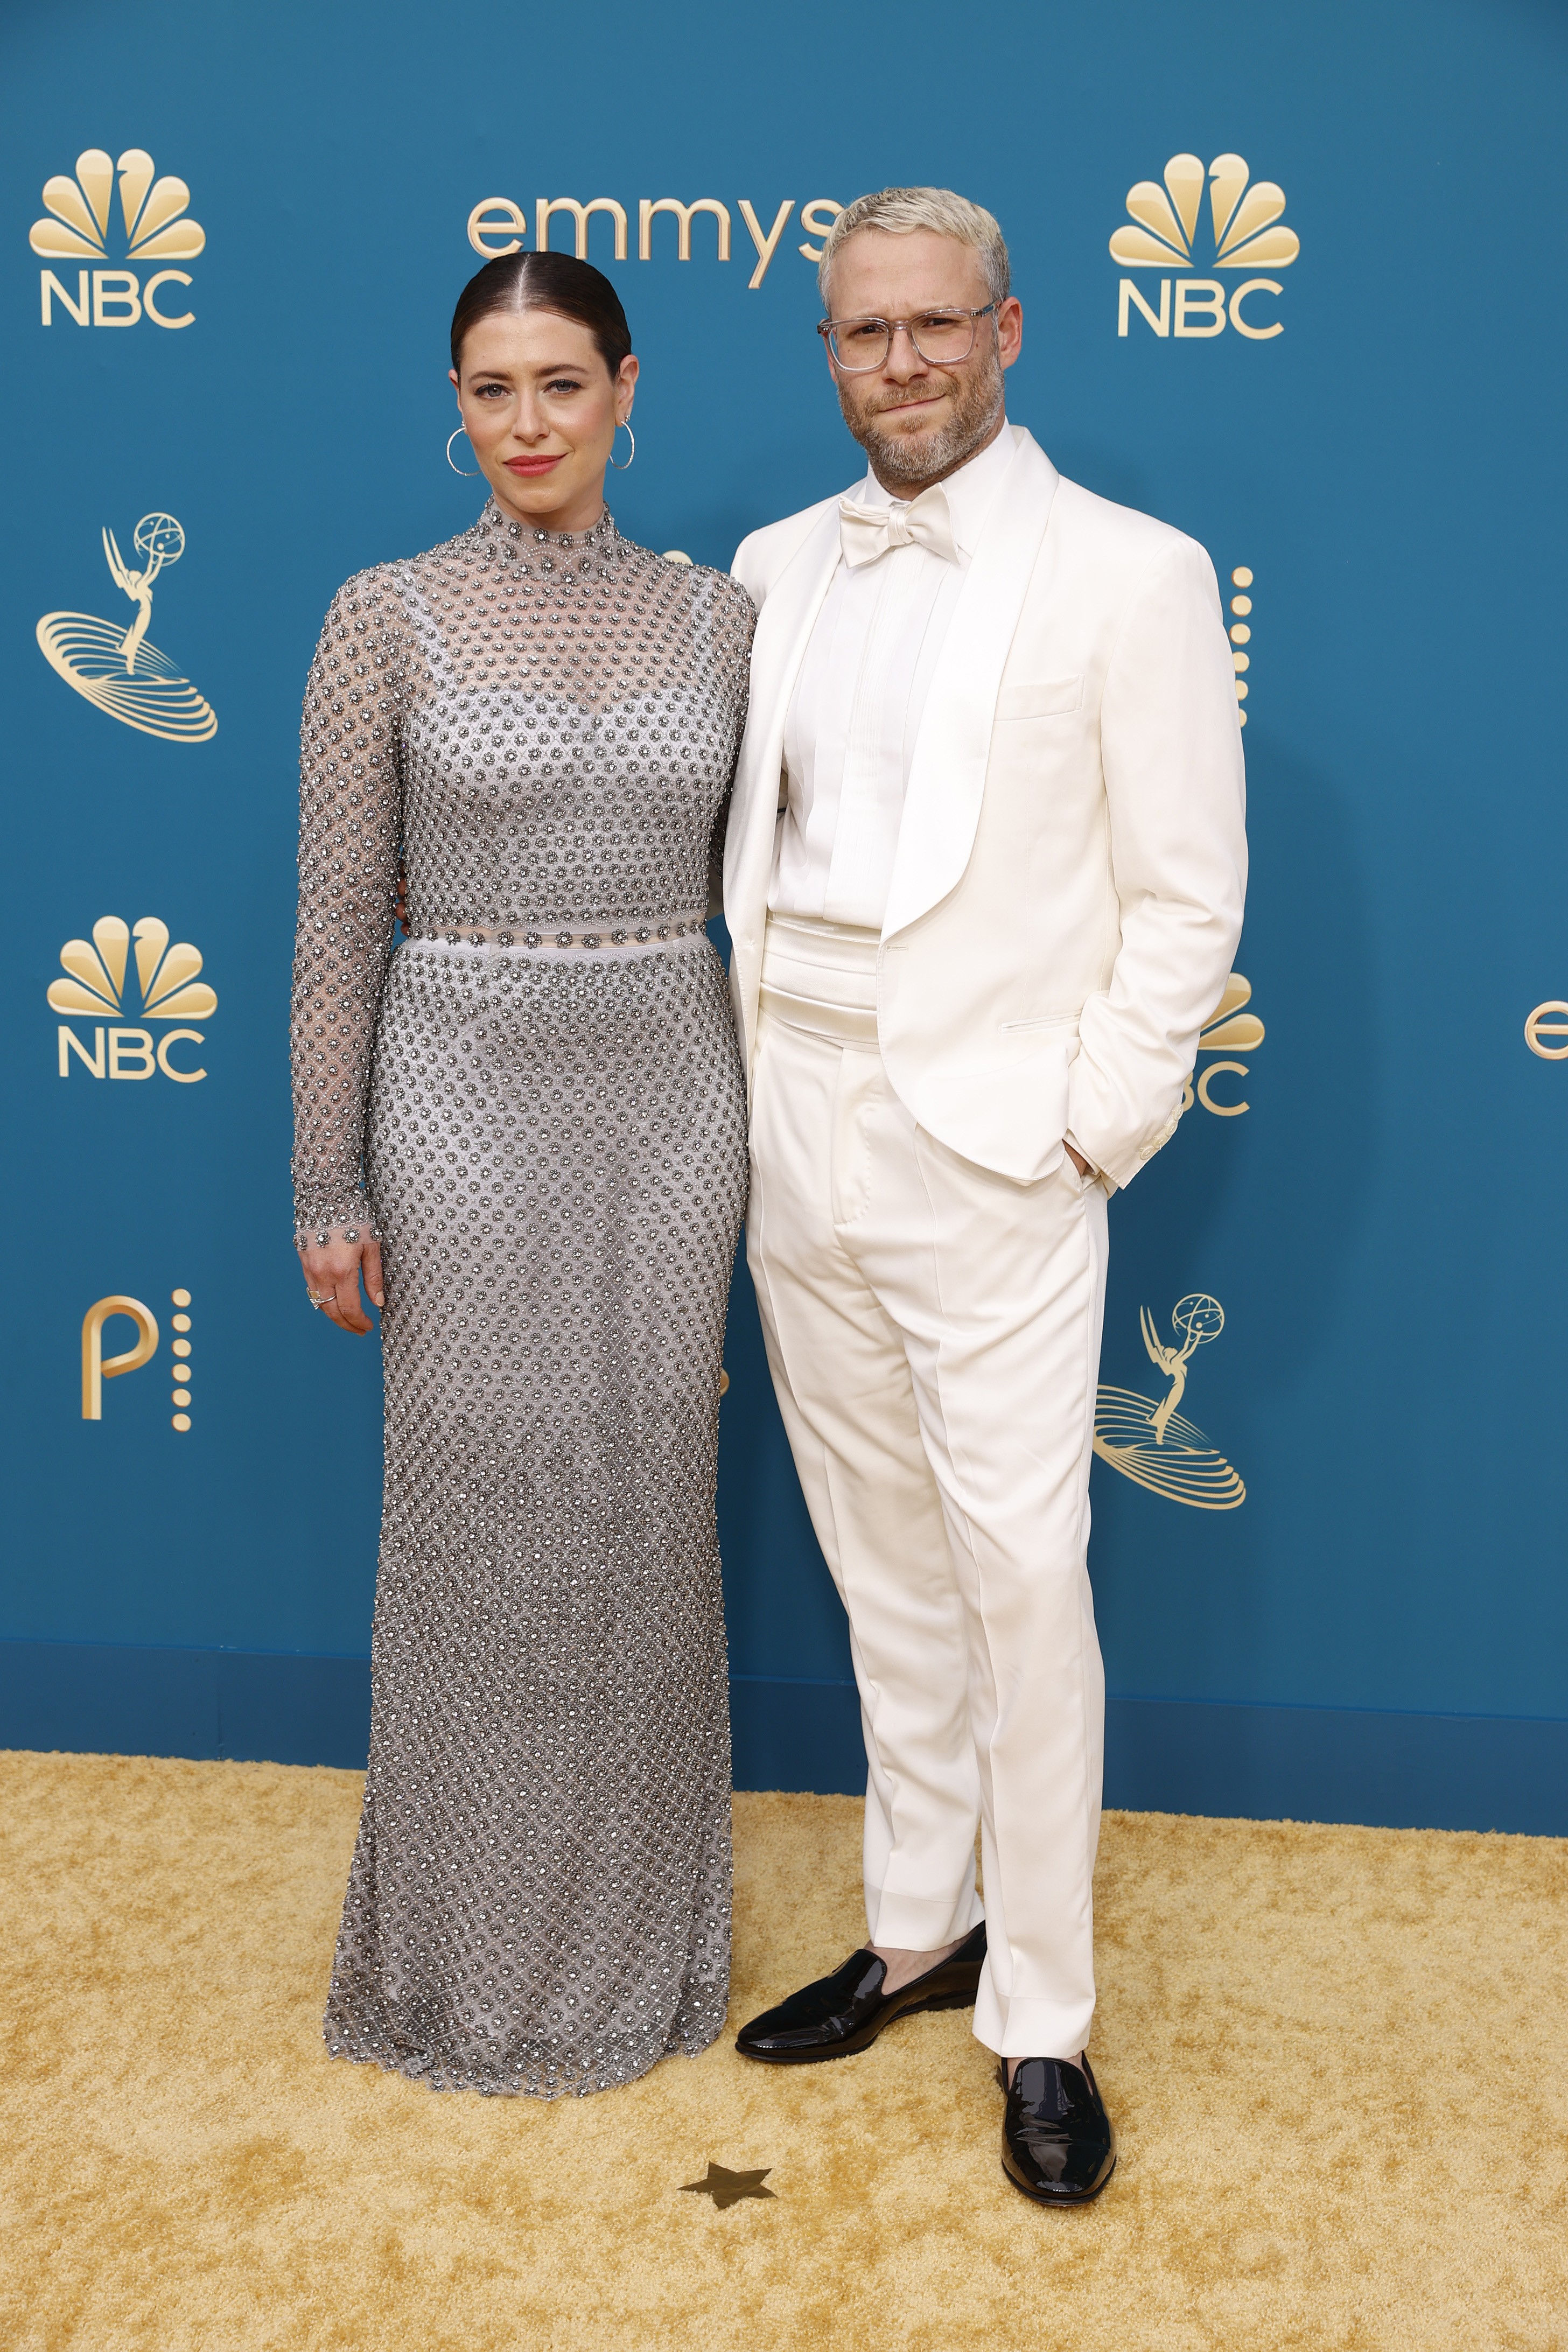  Lauren Miller Rogen e Seth Rogen  (Foto: NBC via Getty Images)